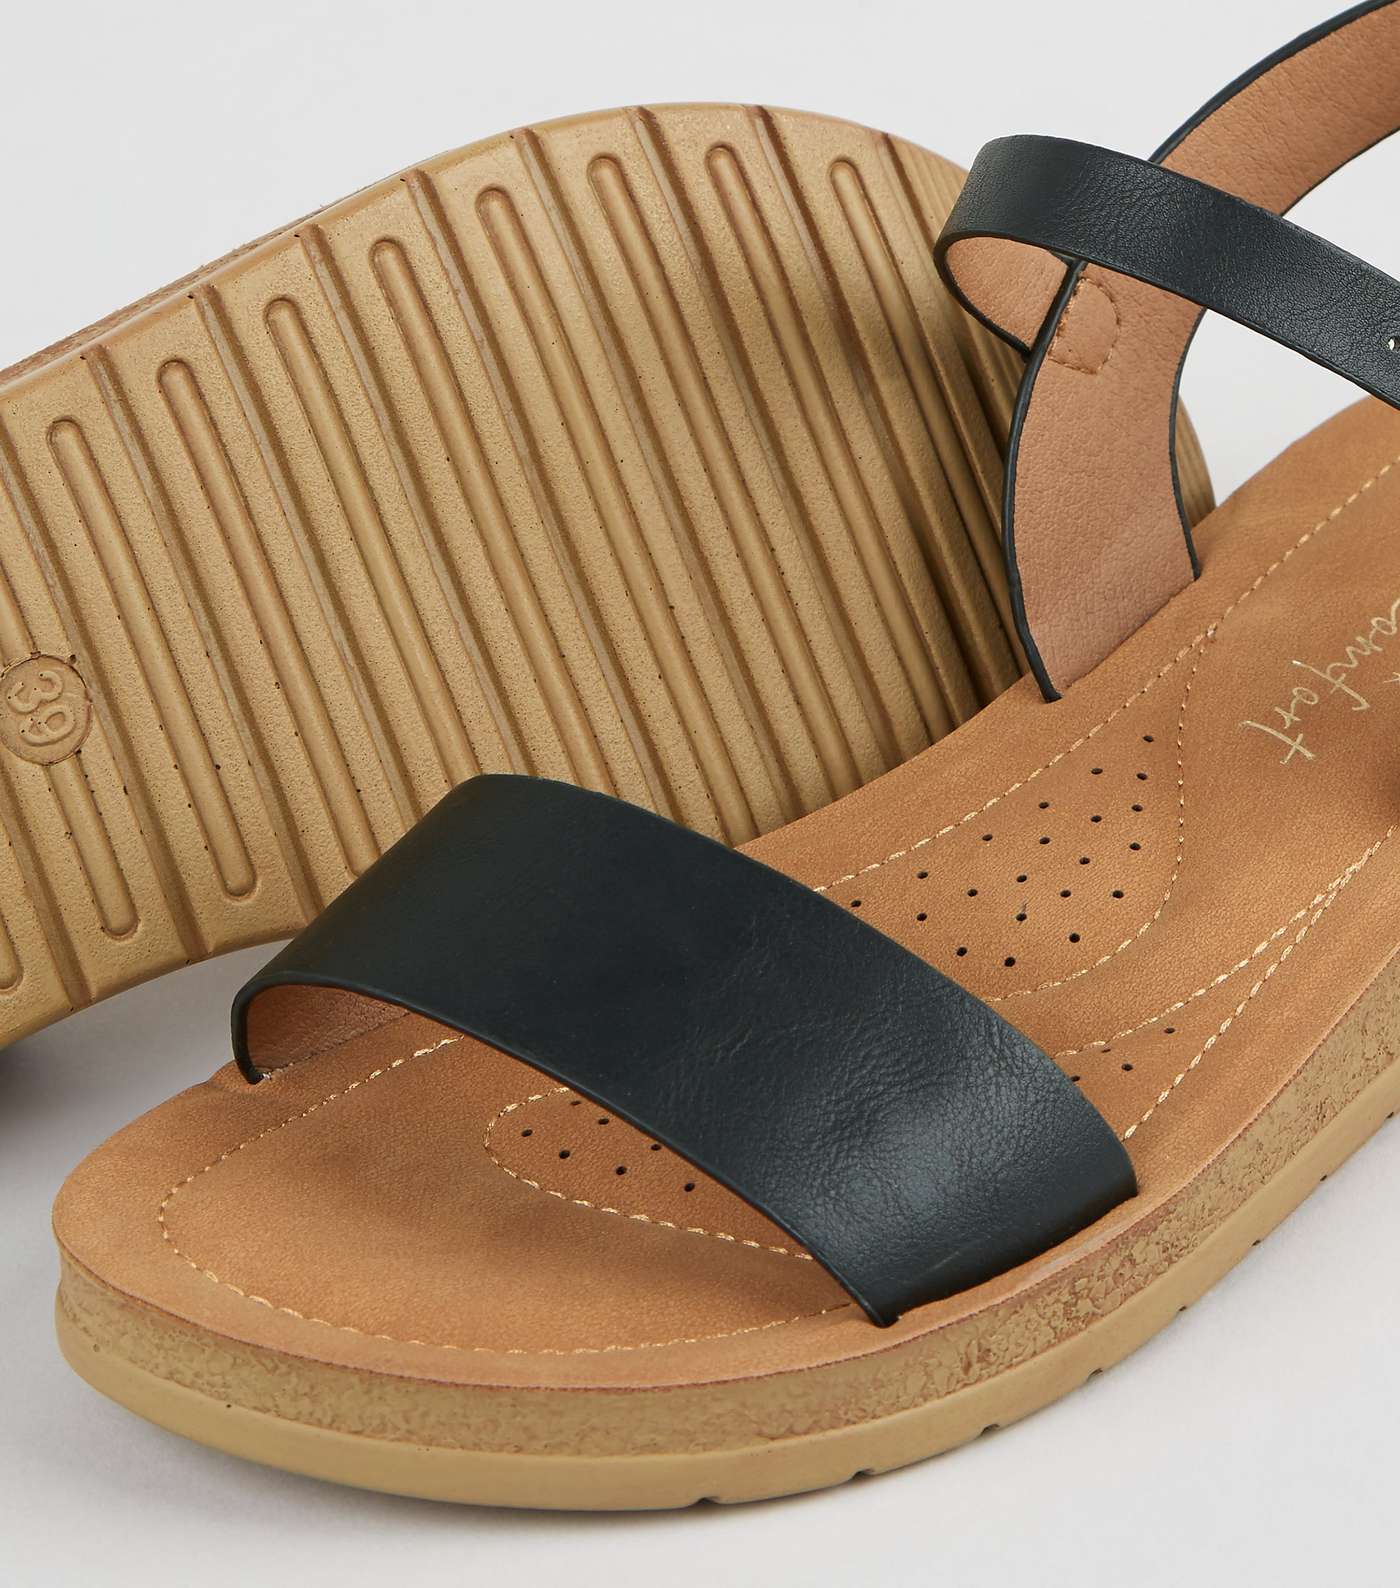 Wide Fit Black Leather-Look 2 Part Sandals Image 4